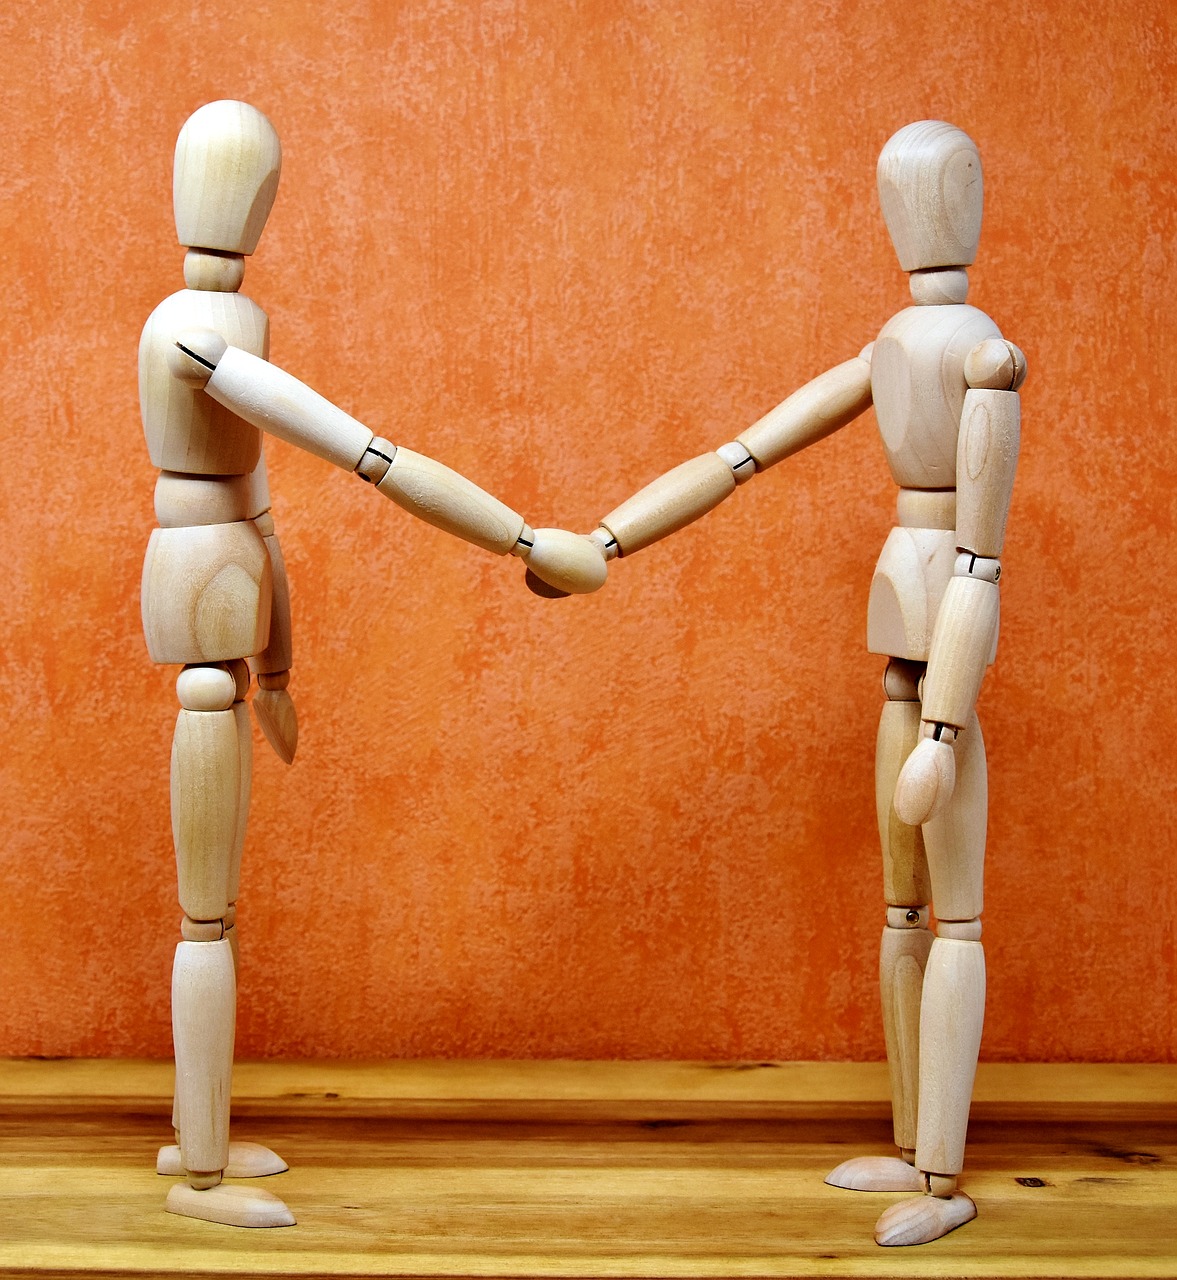 holding hands, handshake, helping hand